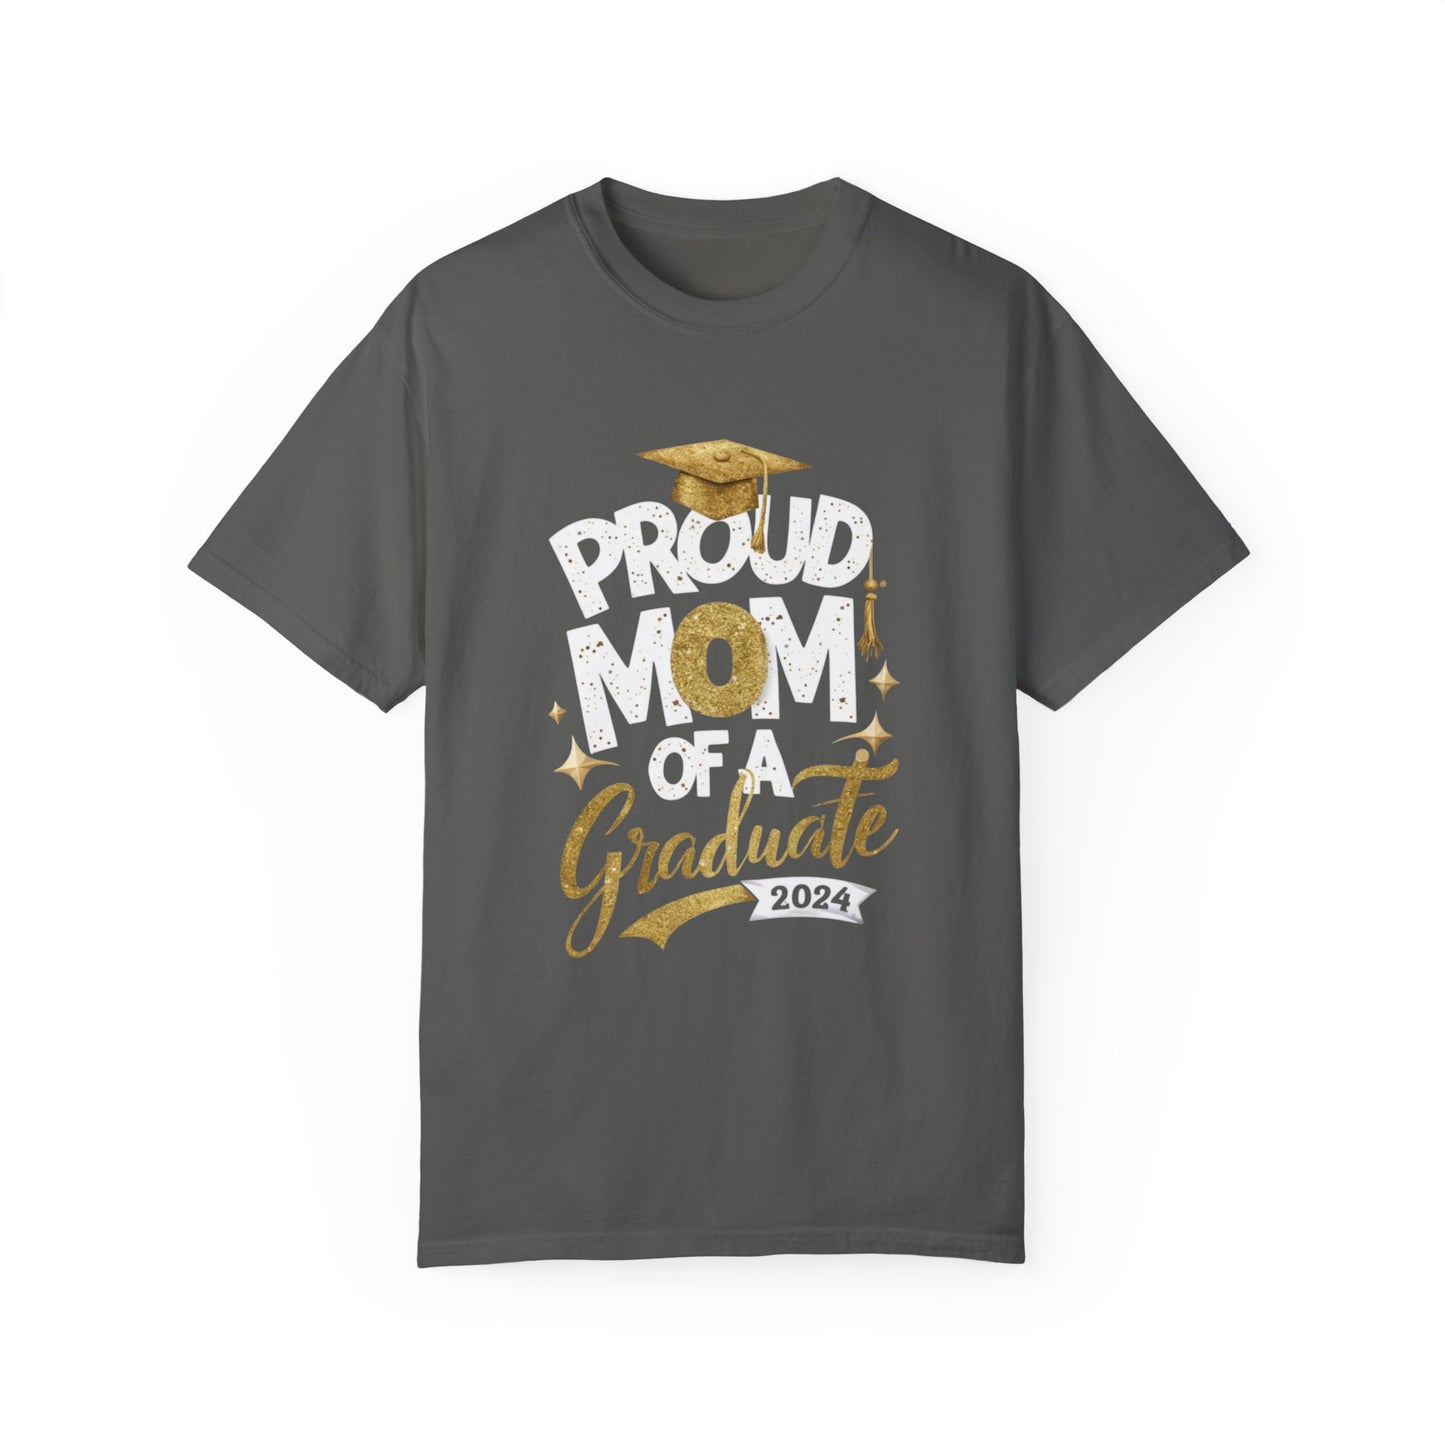 Proud Mom of a 2024 Graduate Unisex Garment-dyed T-shirt Cotton Funny Humorous Graphic Soft Premium Unisex Men Women Pepper T-shirt Birthday Gift-12